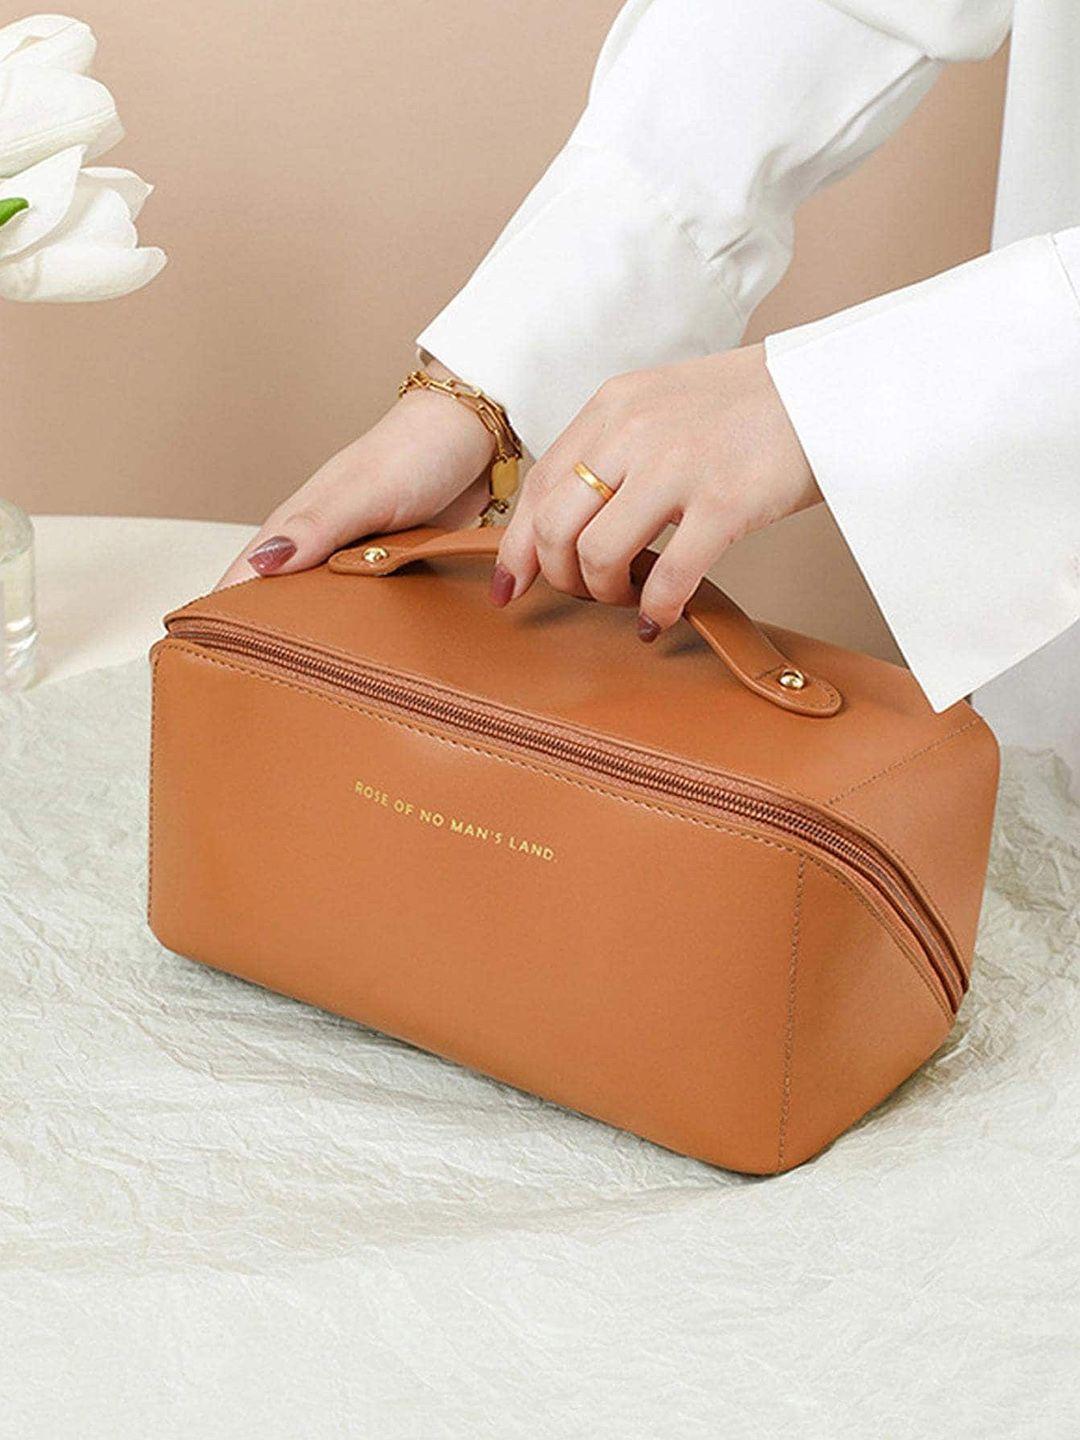 awestuffs-luxury-cosmetic-travel-bag